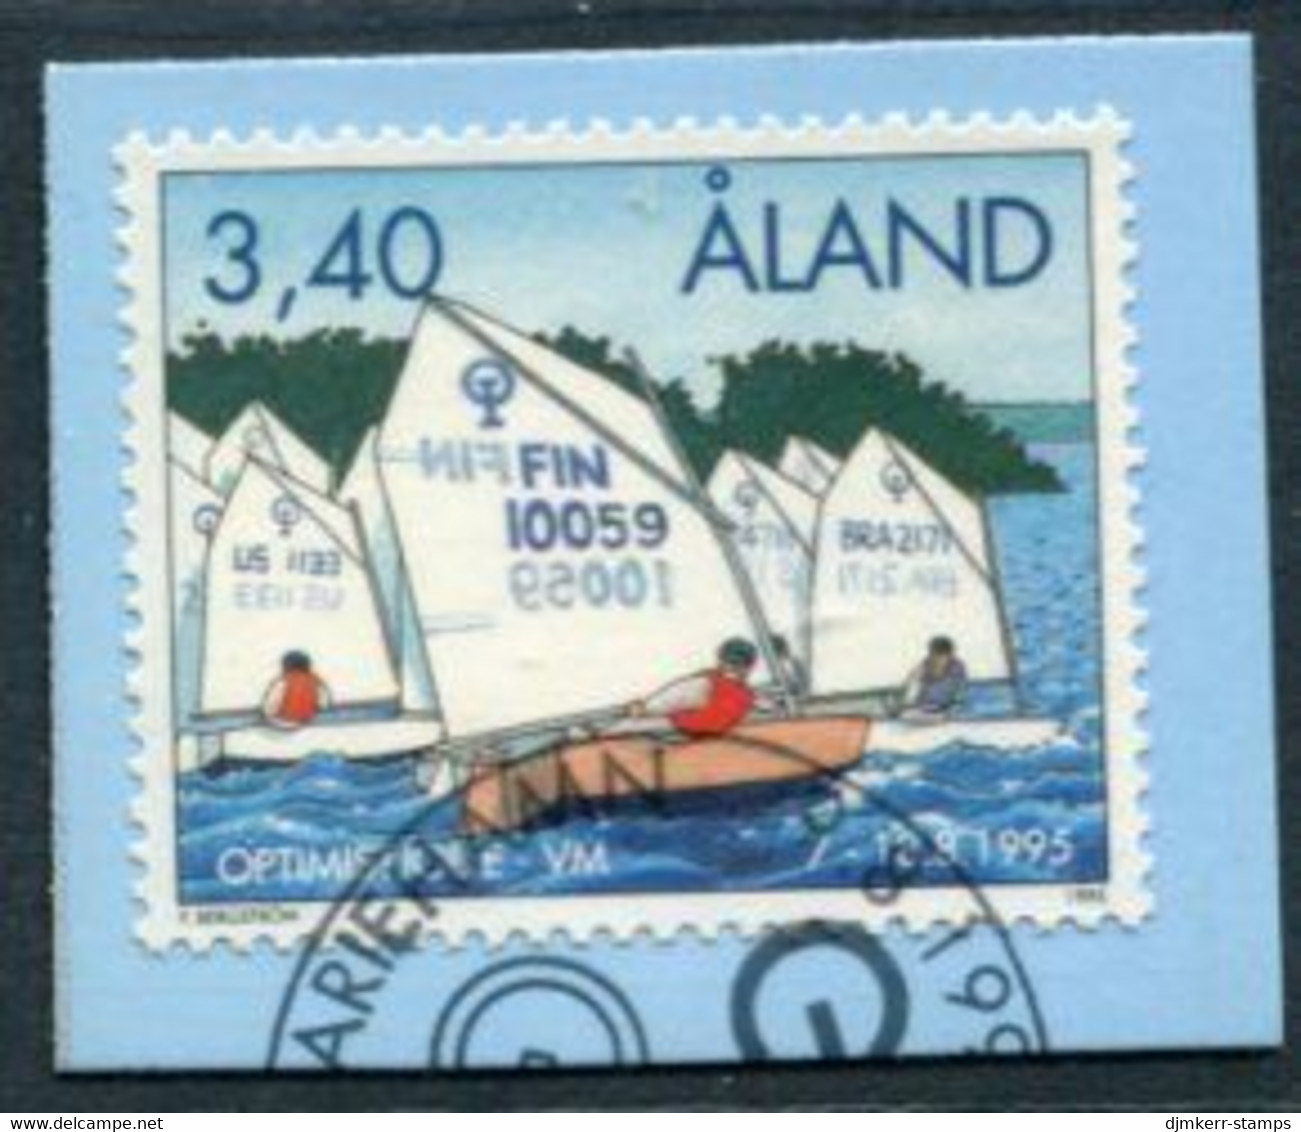 ALAND ISLANDS 1995 Optimist Class Sailing Championship Used.  Michel 104 - Aland